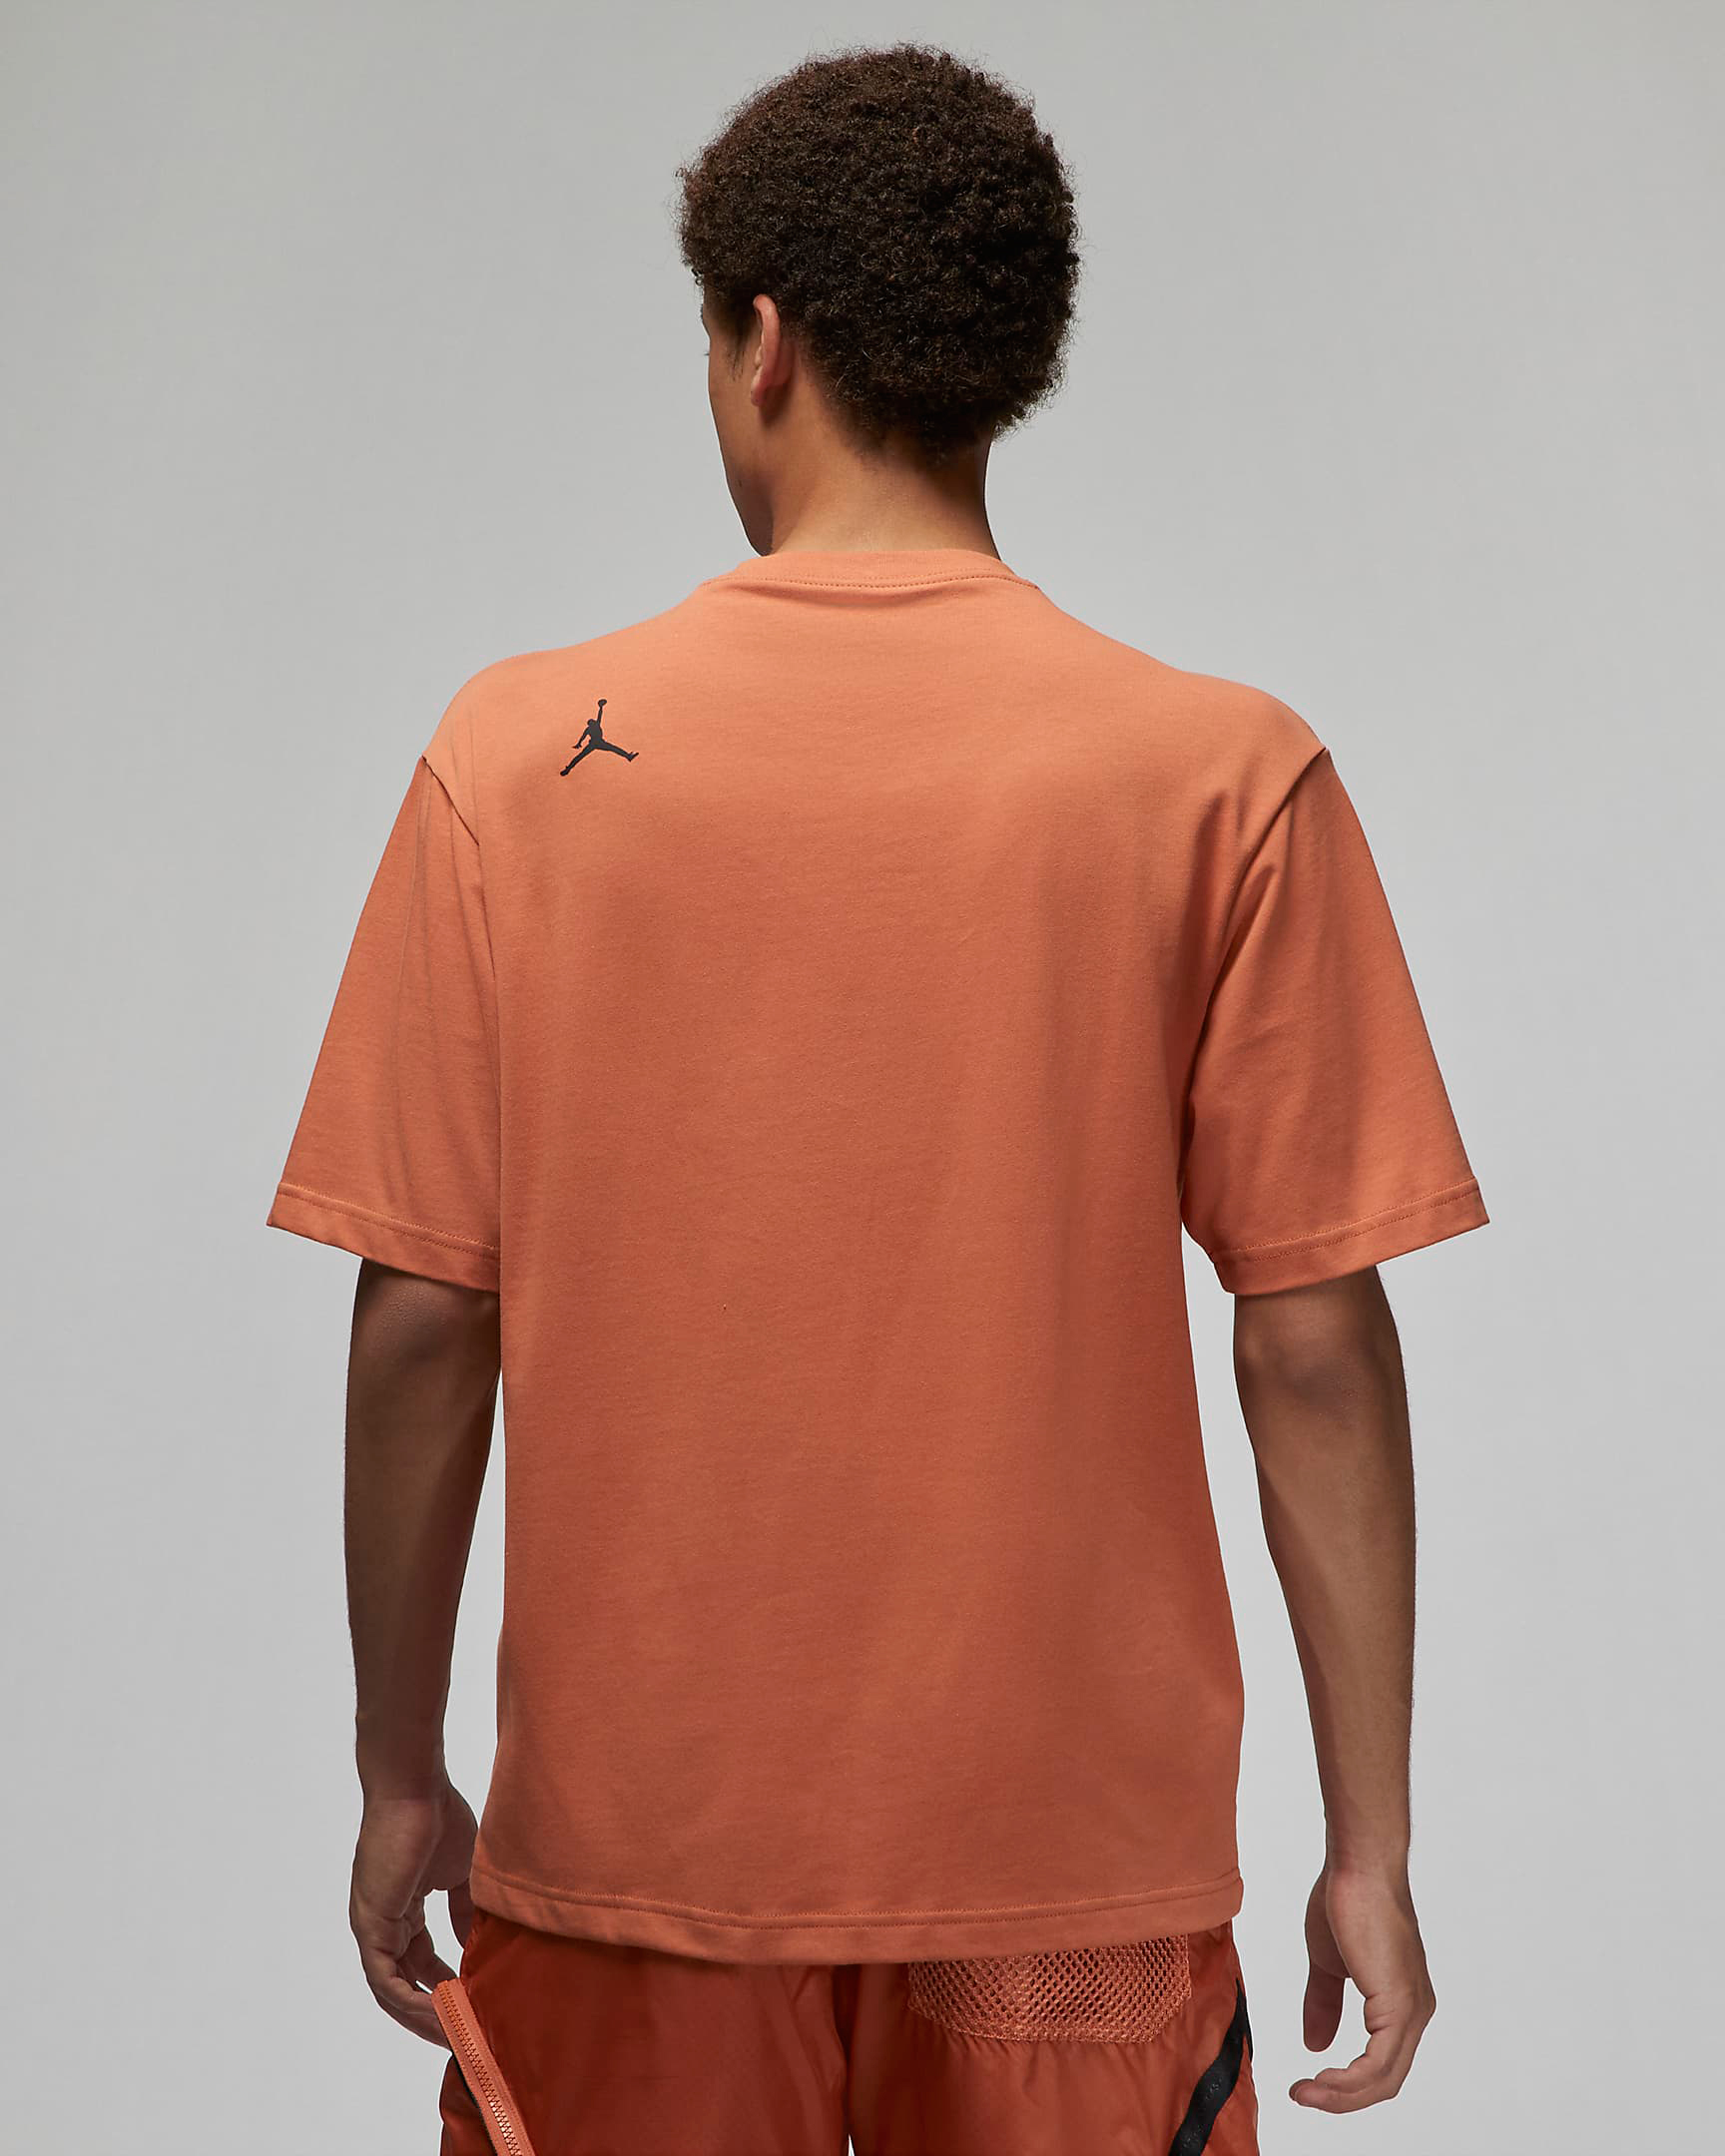 jordan-23-engineered-t-shirt-rust-oxide-orange-brown-2